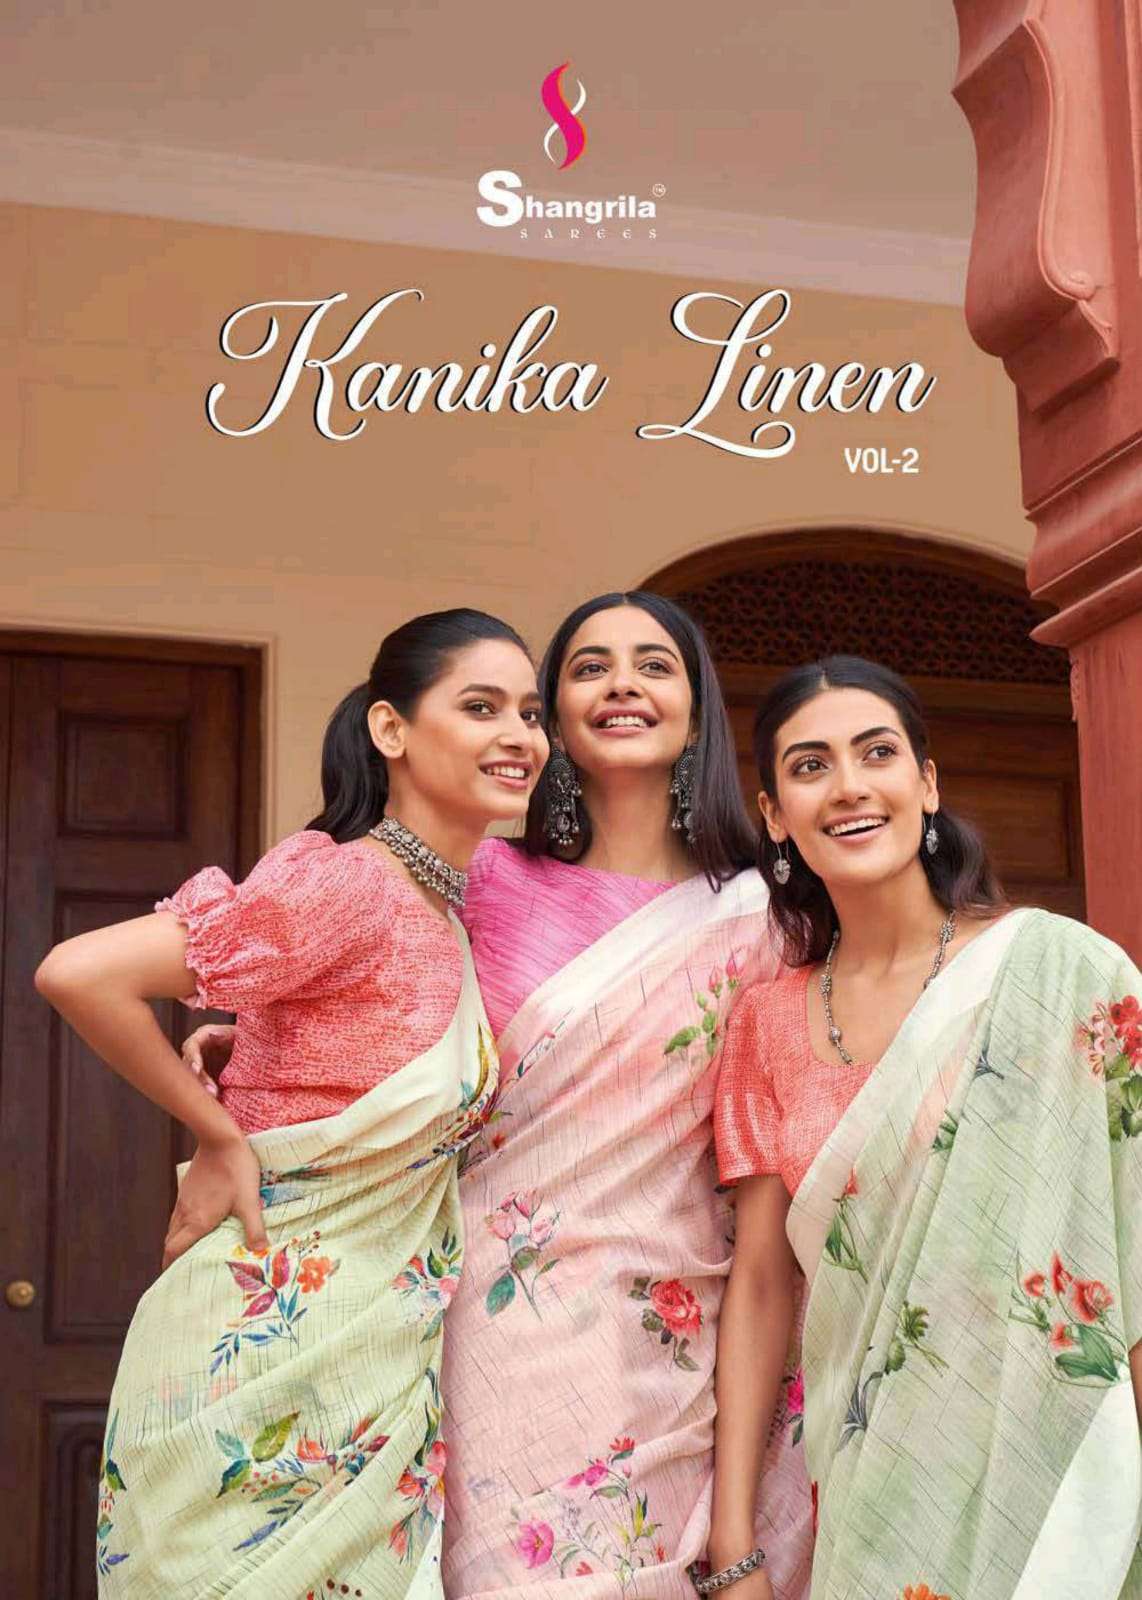 shangrila launch kanika linen vol 2 summer wear ladies printed linen cotton saree